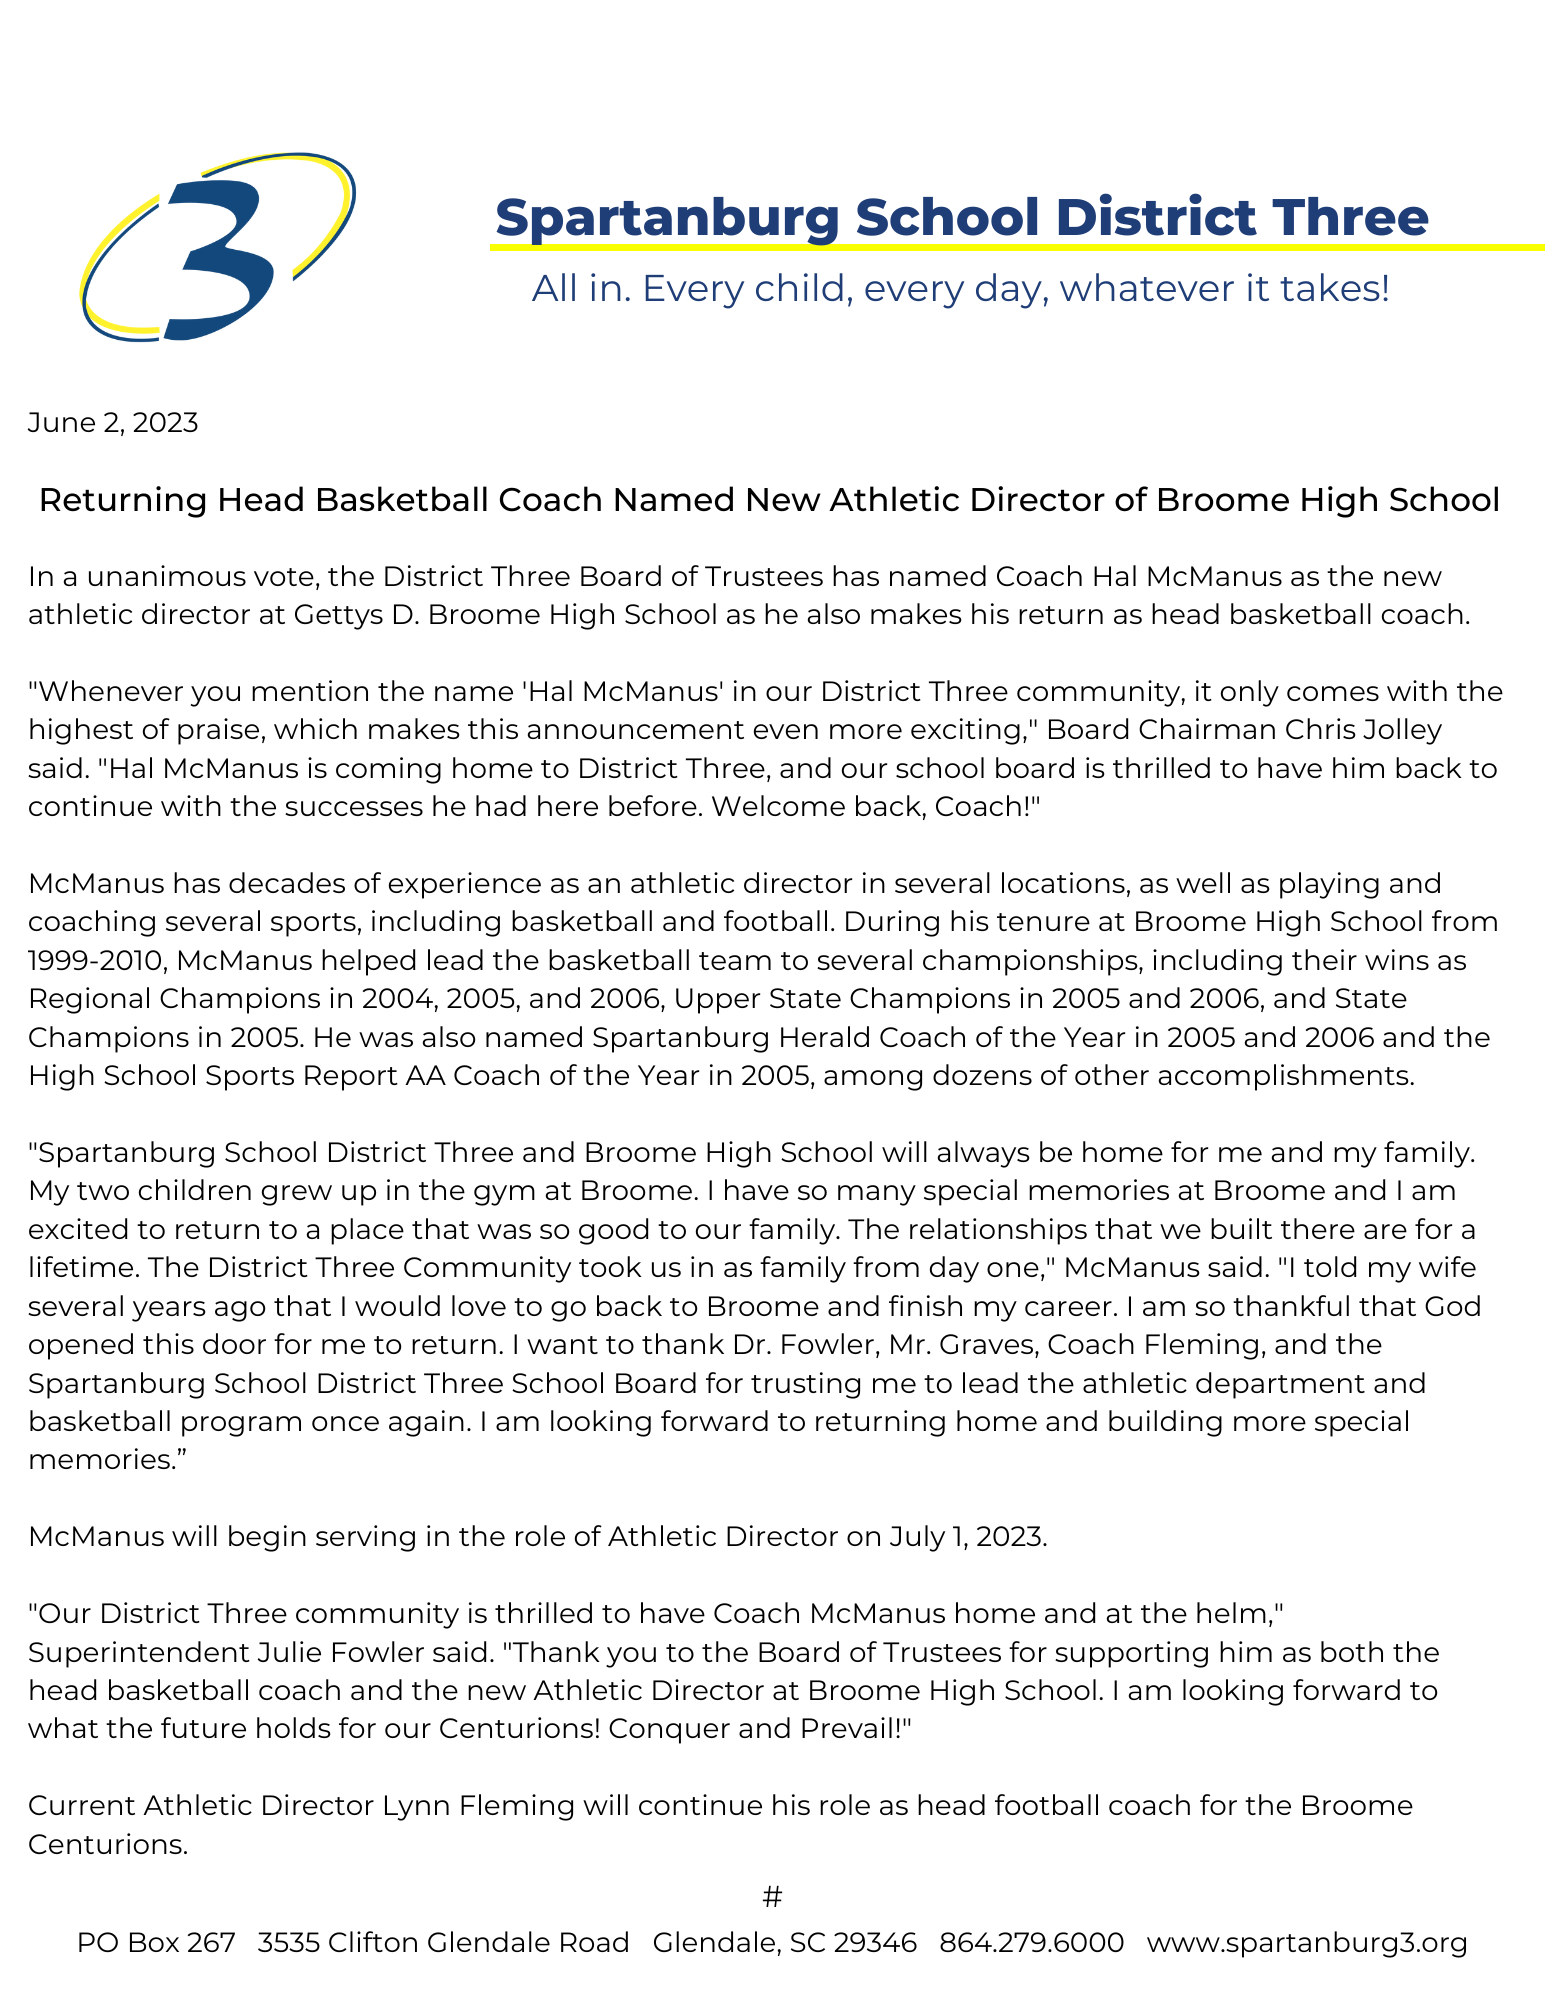 Returning Head Basketball Coach Named New Athletic Director of Broome High School https://www.gocenturionsgo.com/news/84516